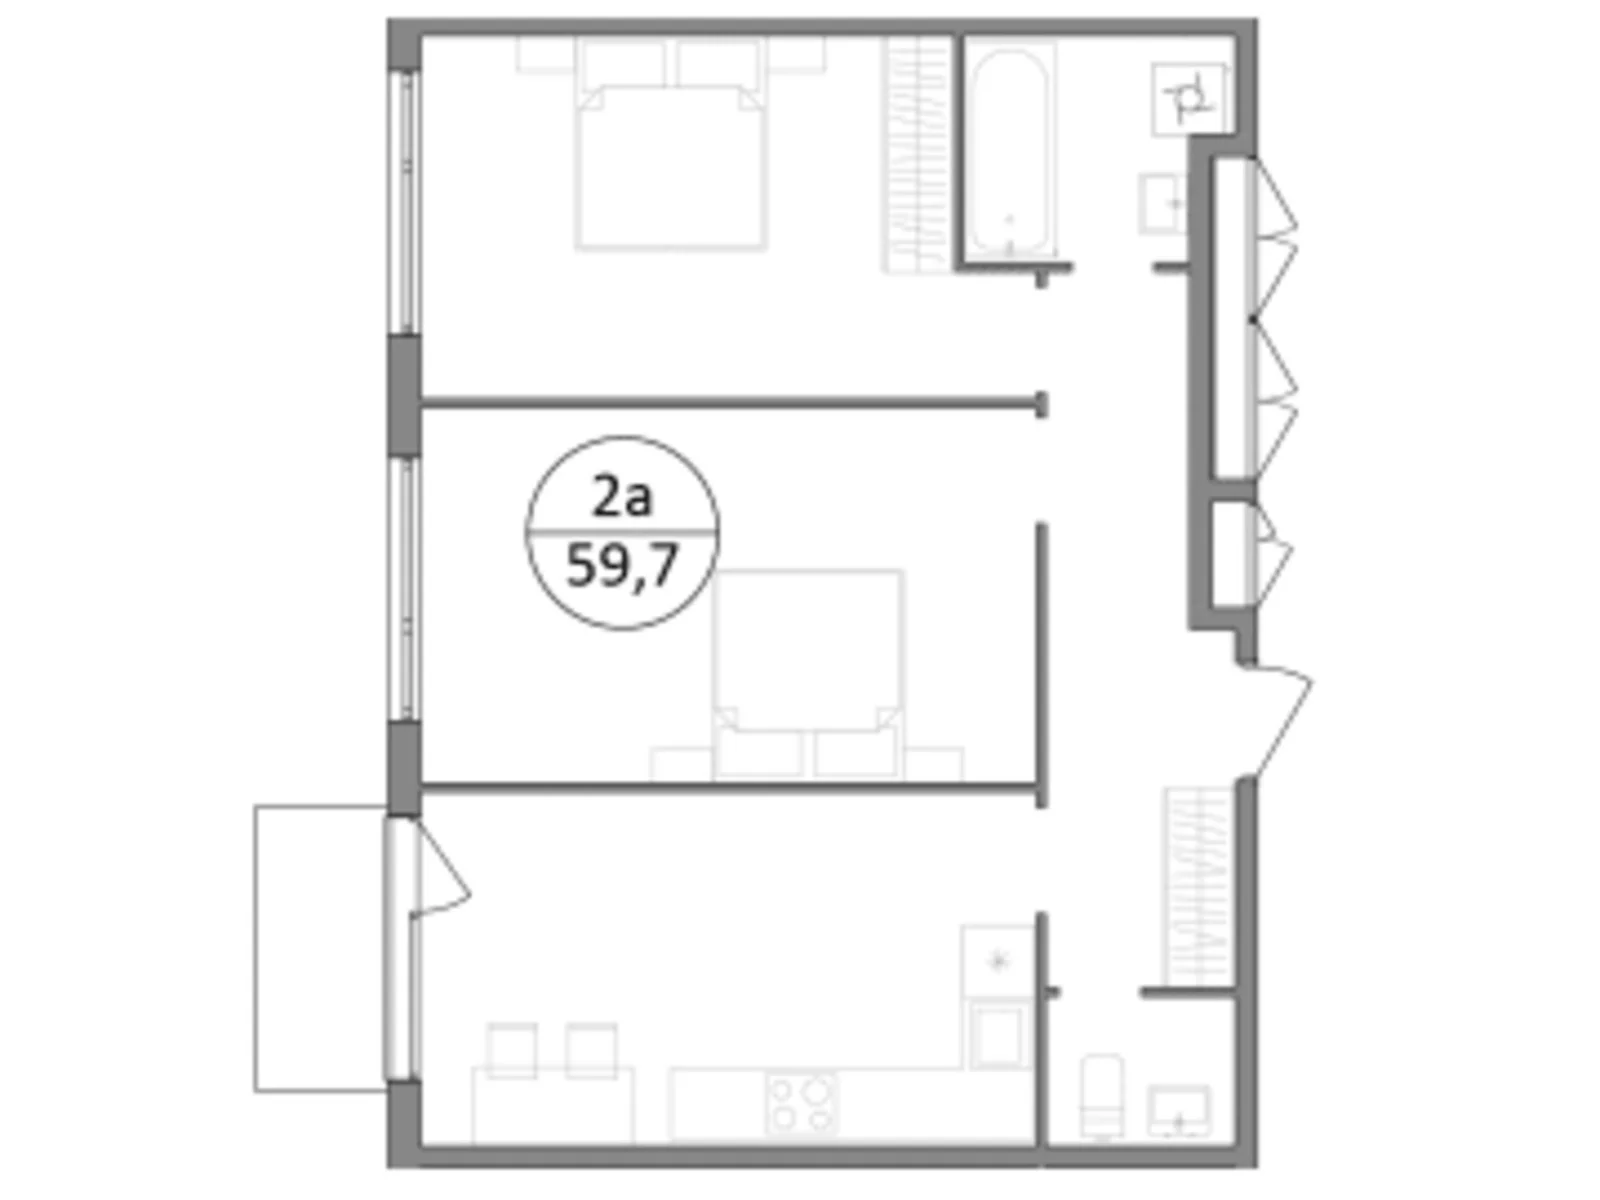 Продается 2-комнатная квартира 59.7 кв. м в Брюховичах, цена: 57849 $ - фото 1